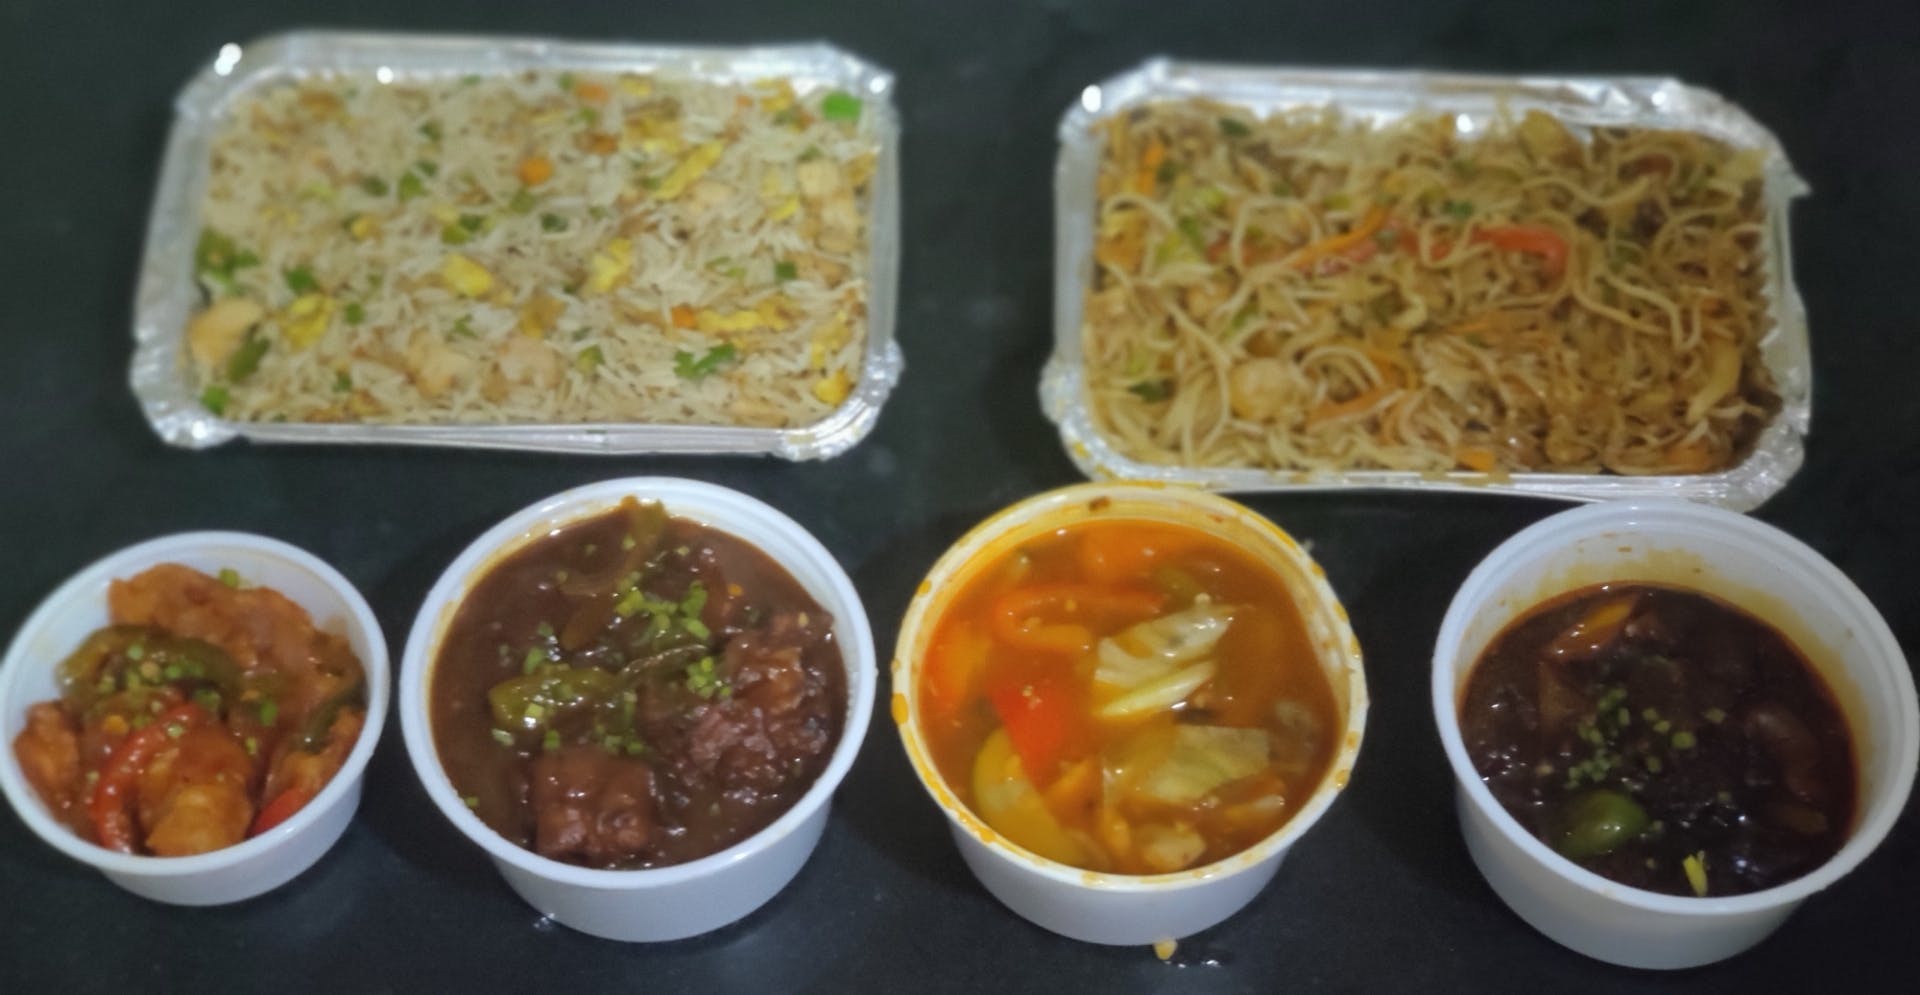 Dish,Food,Cuisine,Ingredient,Meal,Lunch,Produce,Comfort food,Indian cuisine,Recipe